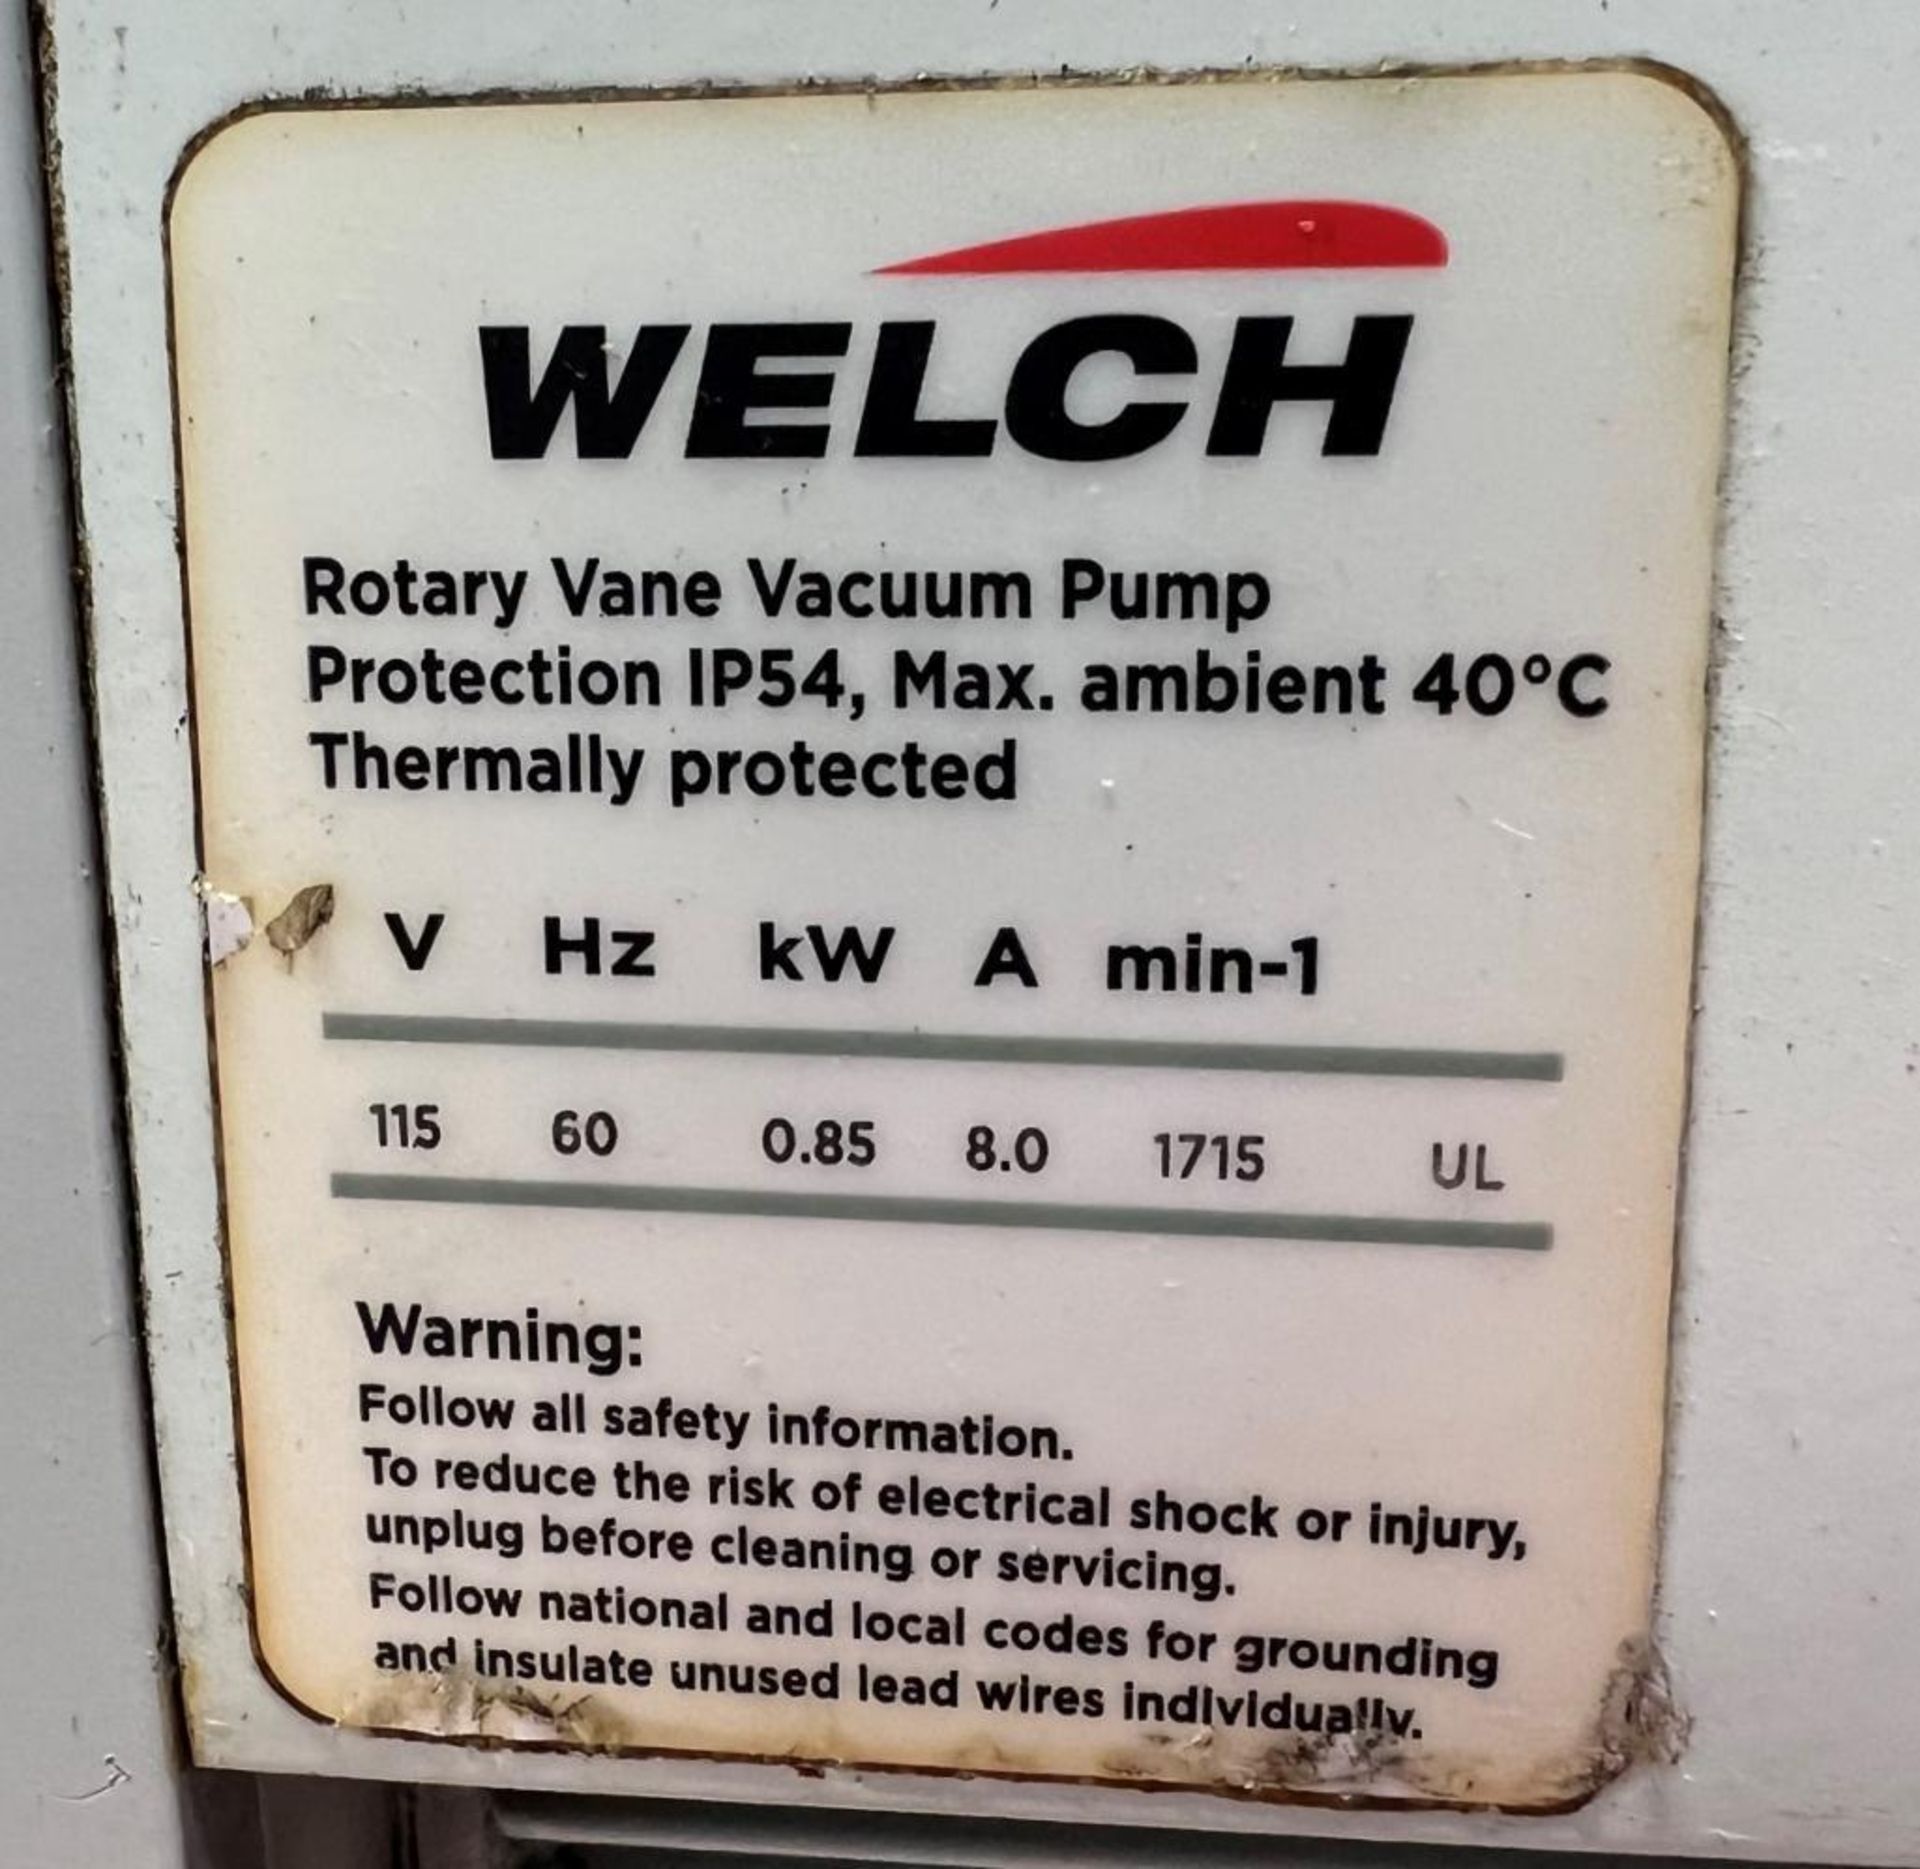 Welch C/RVPRO16 Rotary Vane Vacuum Pump, Model 3161-01, Serial# 1804102041. - Image 5 of 6